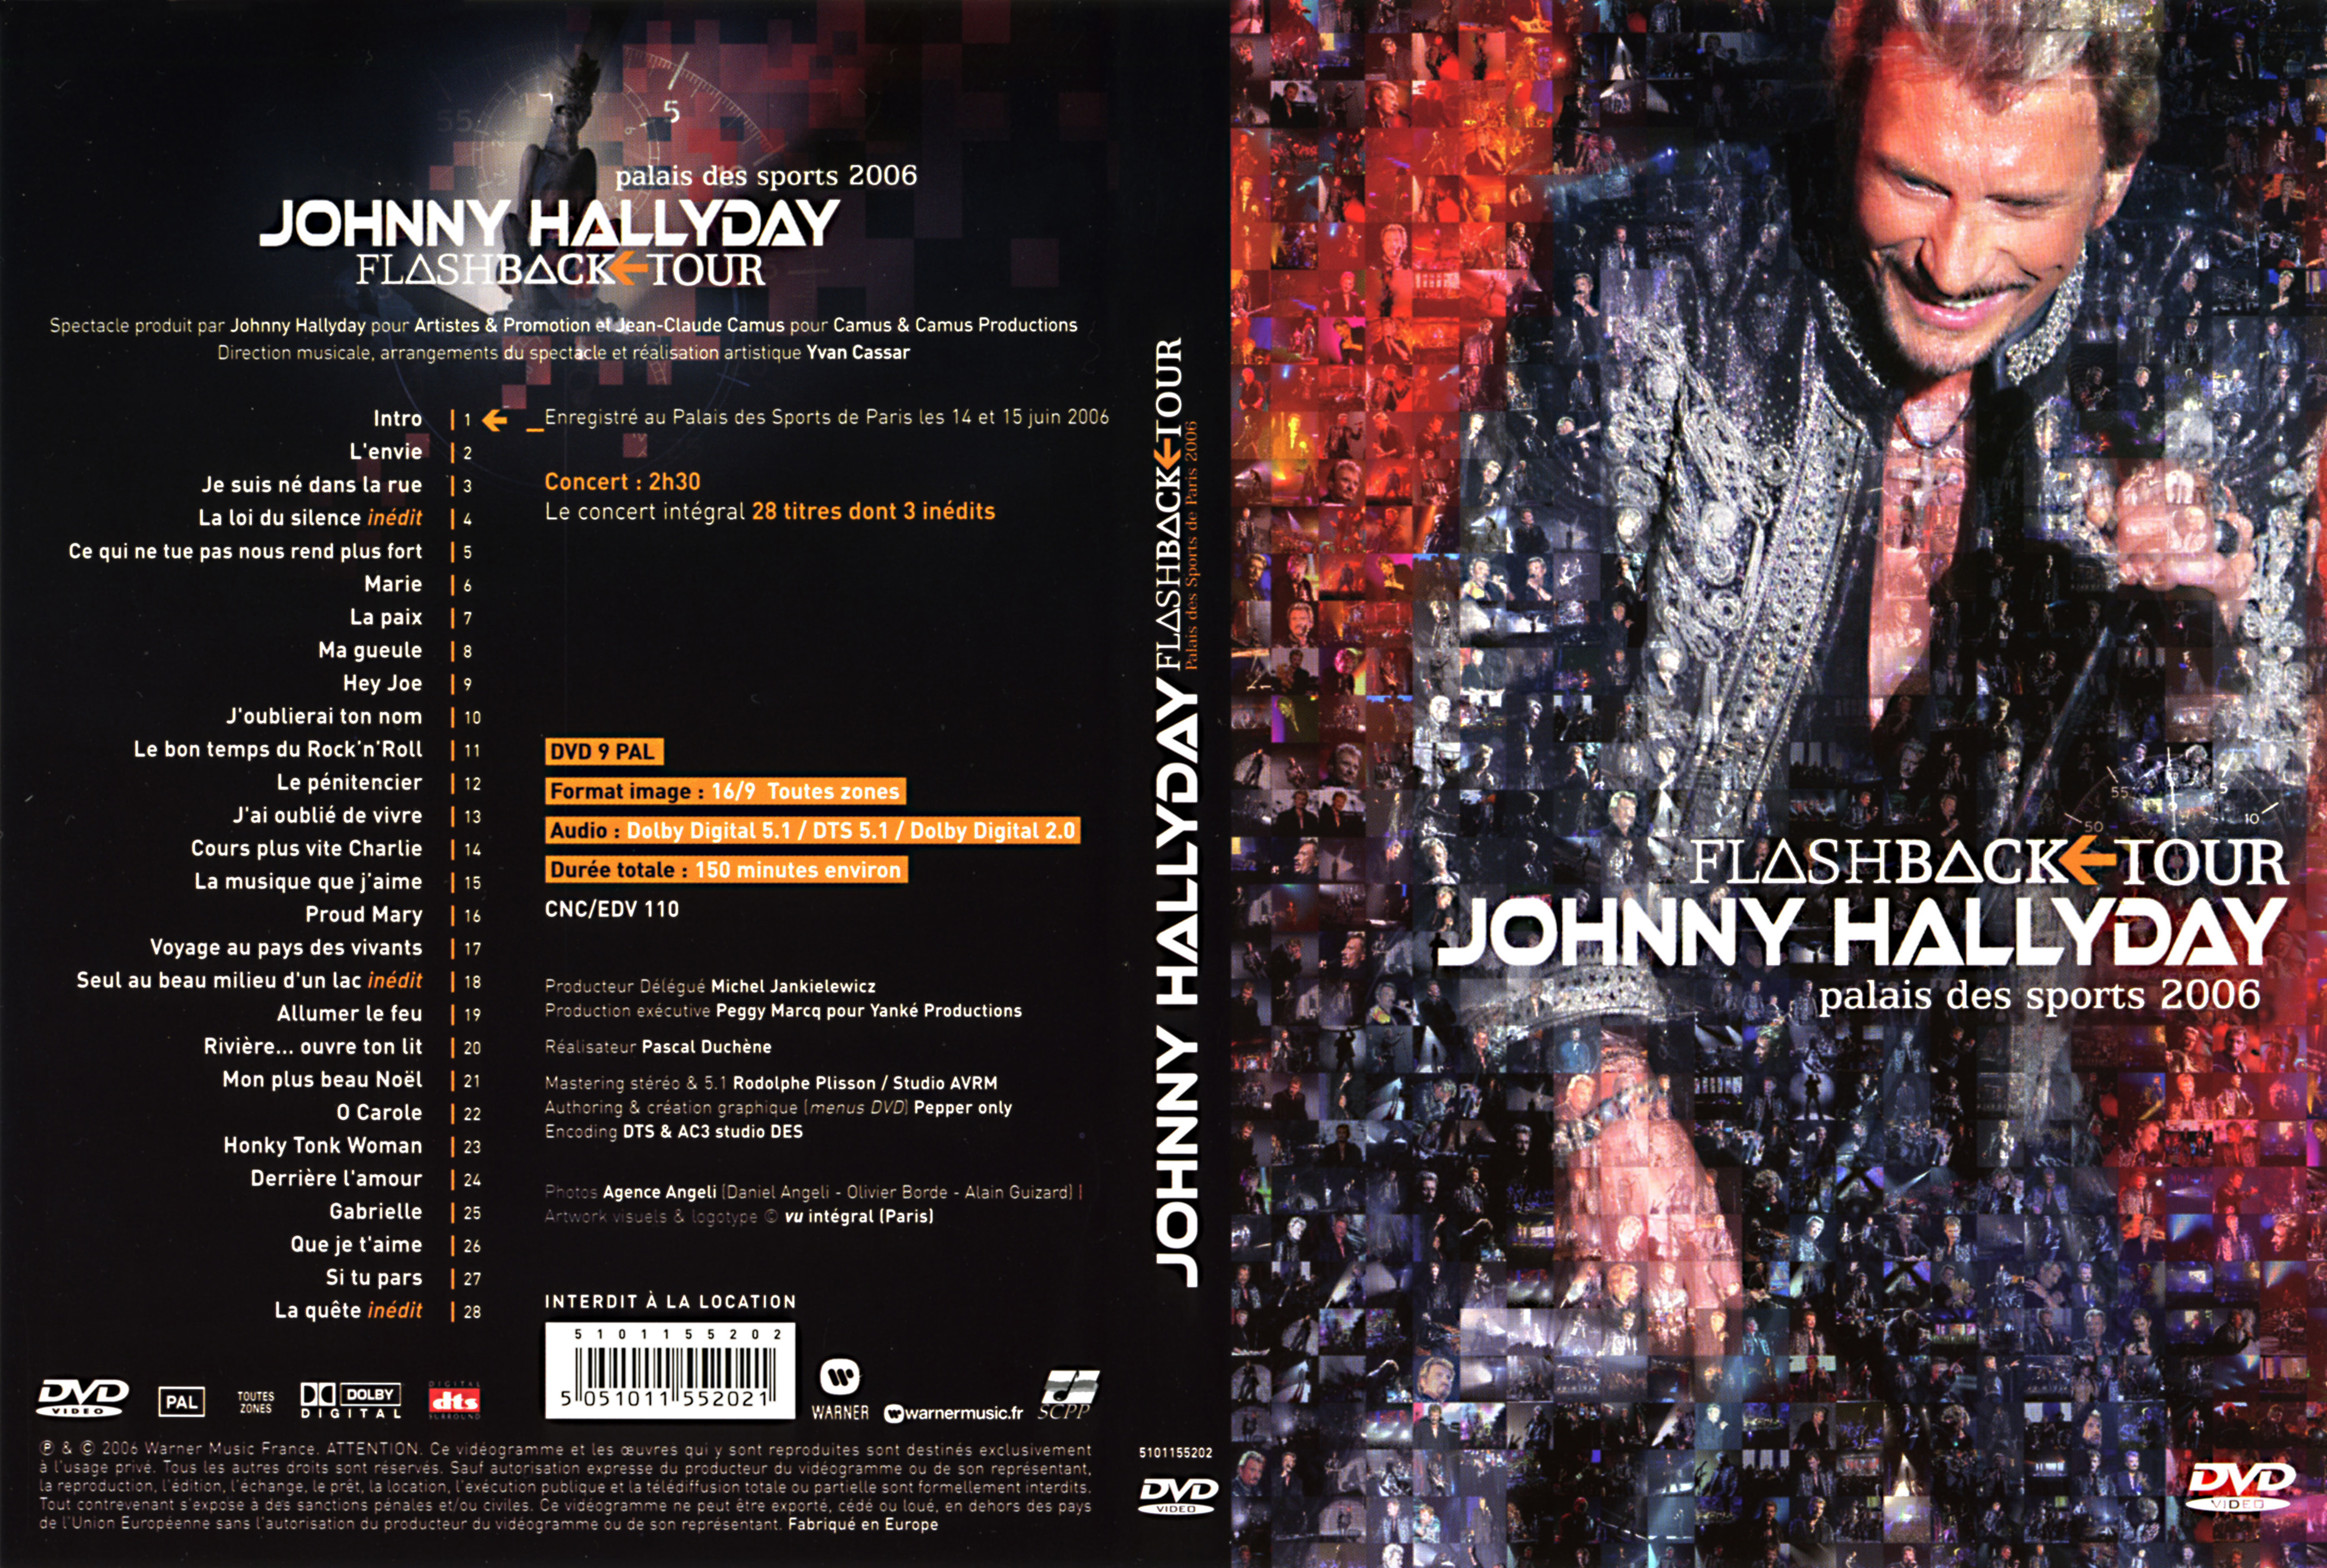 Jaquette DVD Johnny Hallyday Flashback Tour 2006